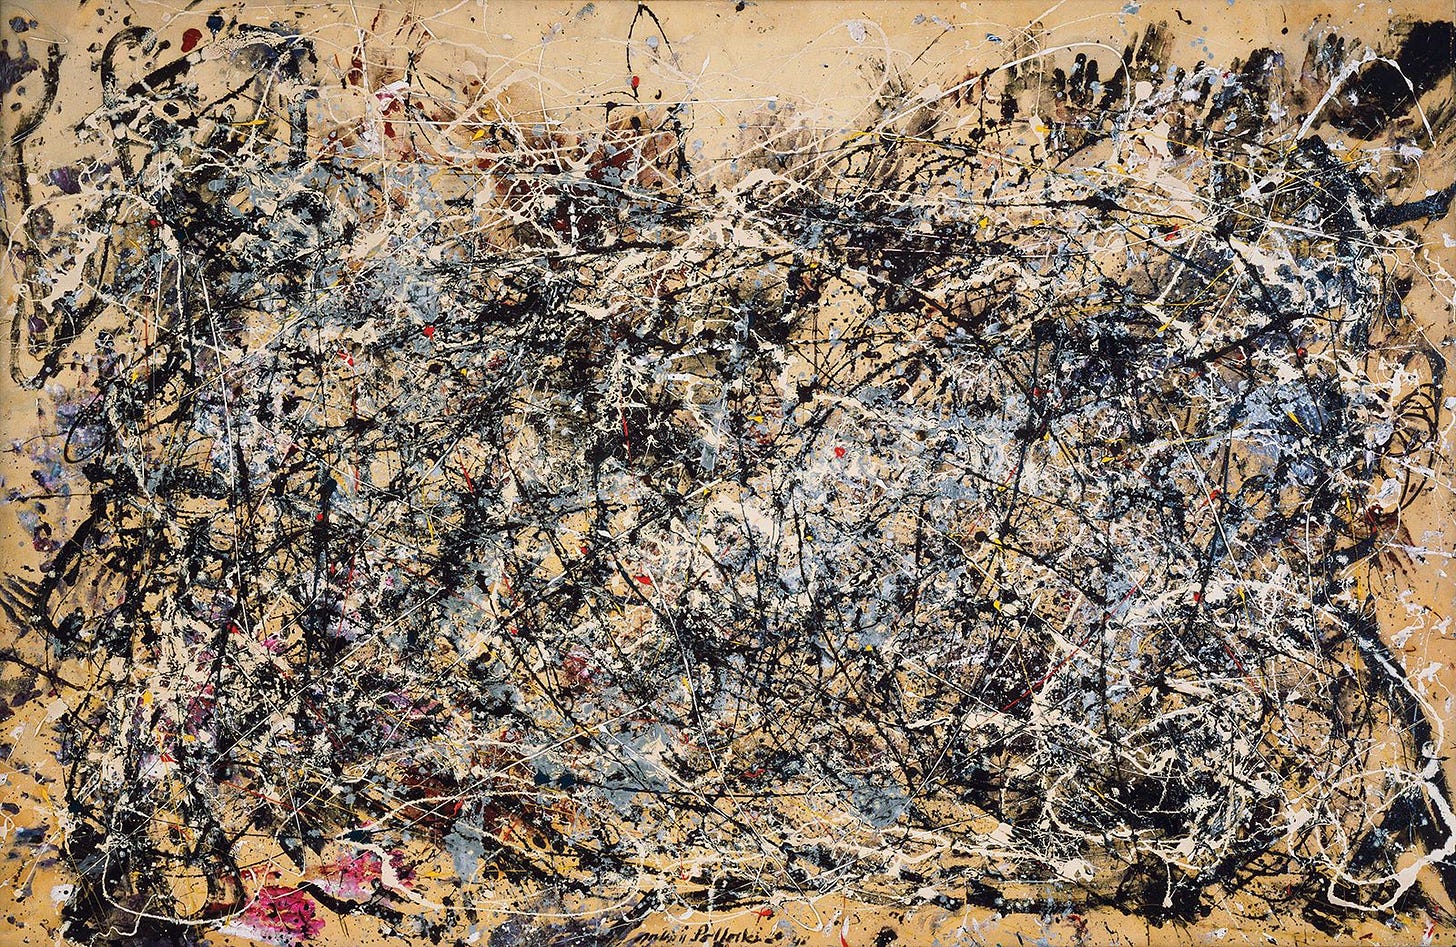 Jackson Pollock - “Poured” works | Britannica